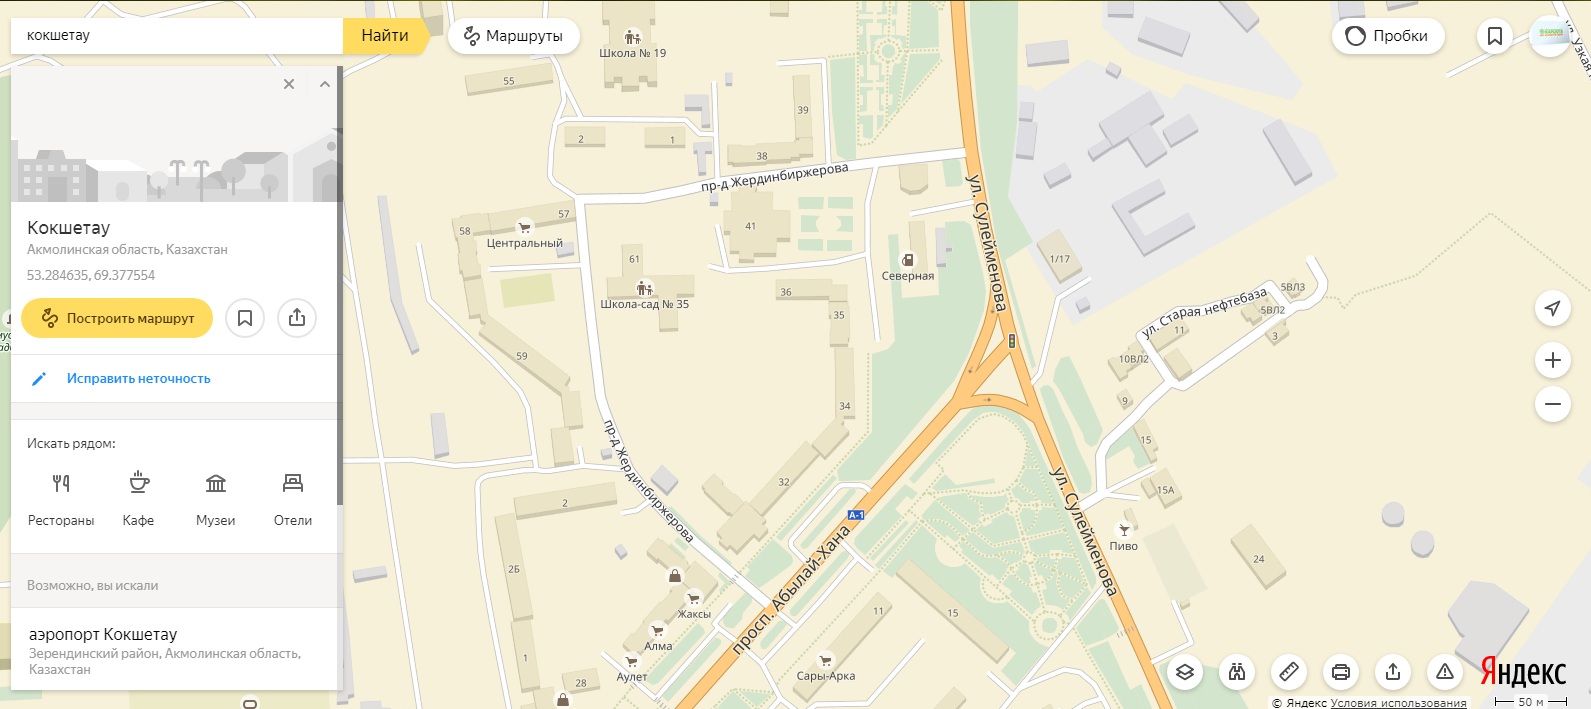 Проезд "Жердинбиржерова" появился на Яндекс-карте Кокшетау